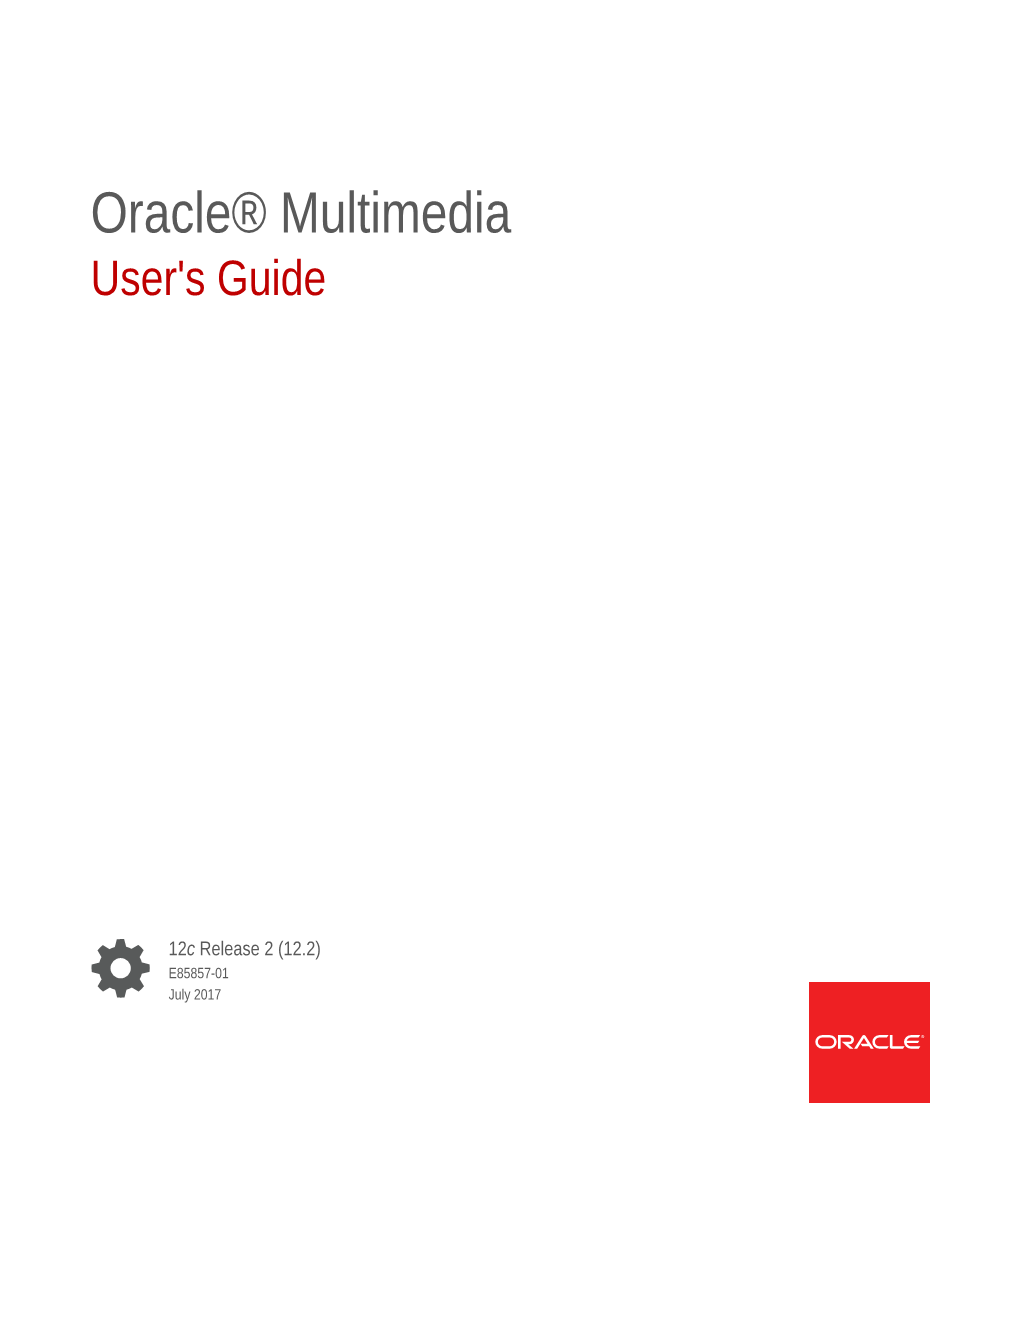 Oracle® Multimedia User's Guide